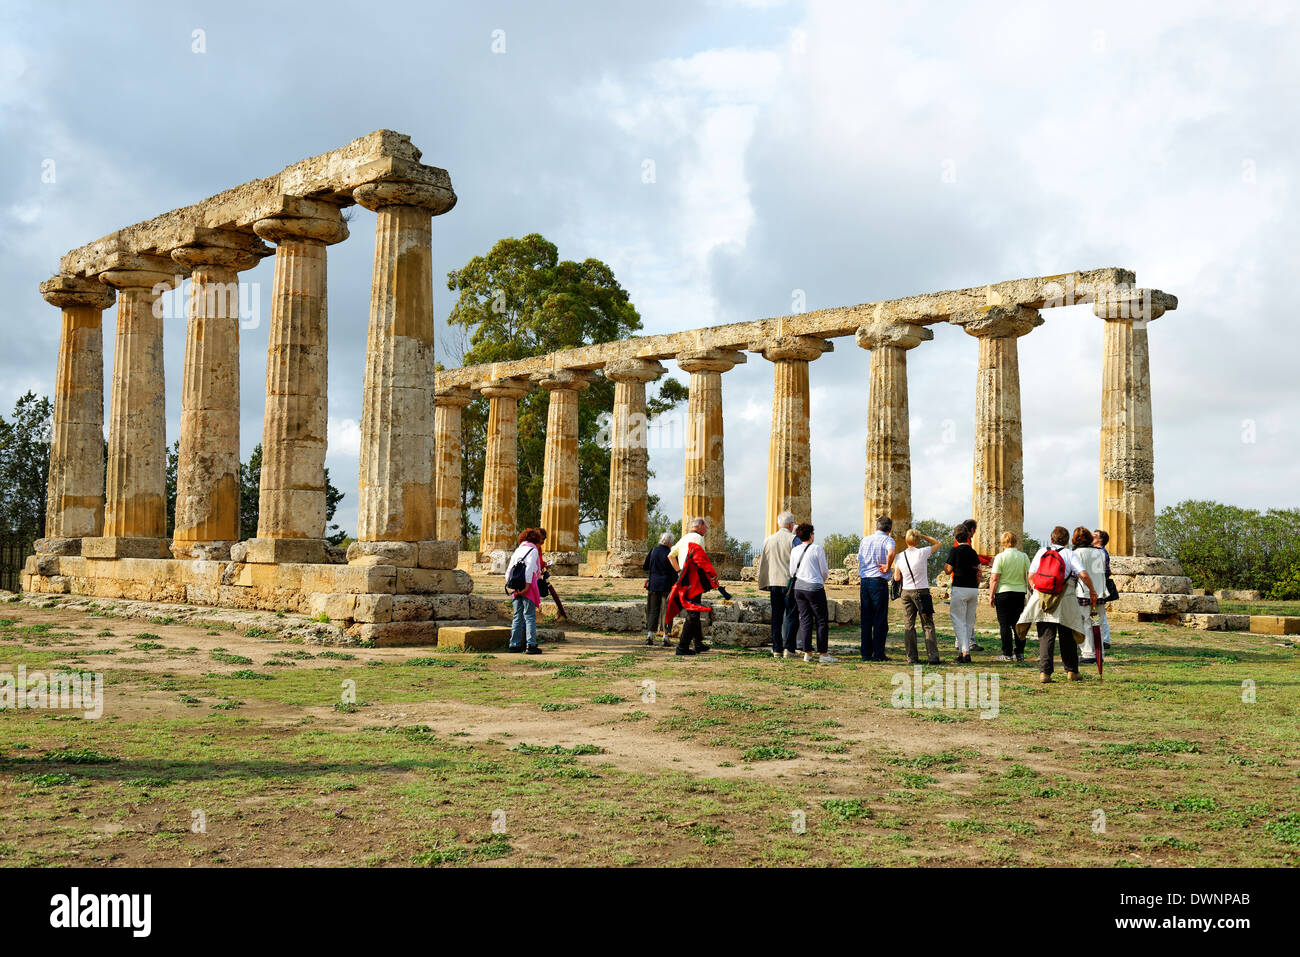 Temple of Hera, ancient city of Metapontum, Bernalda, Basilicata region, Italy Stock Photo